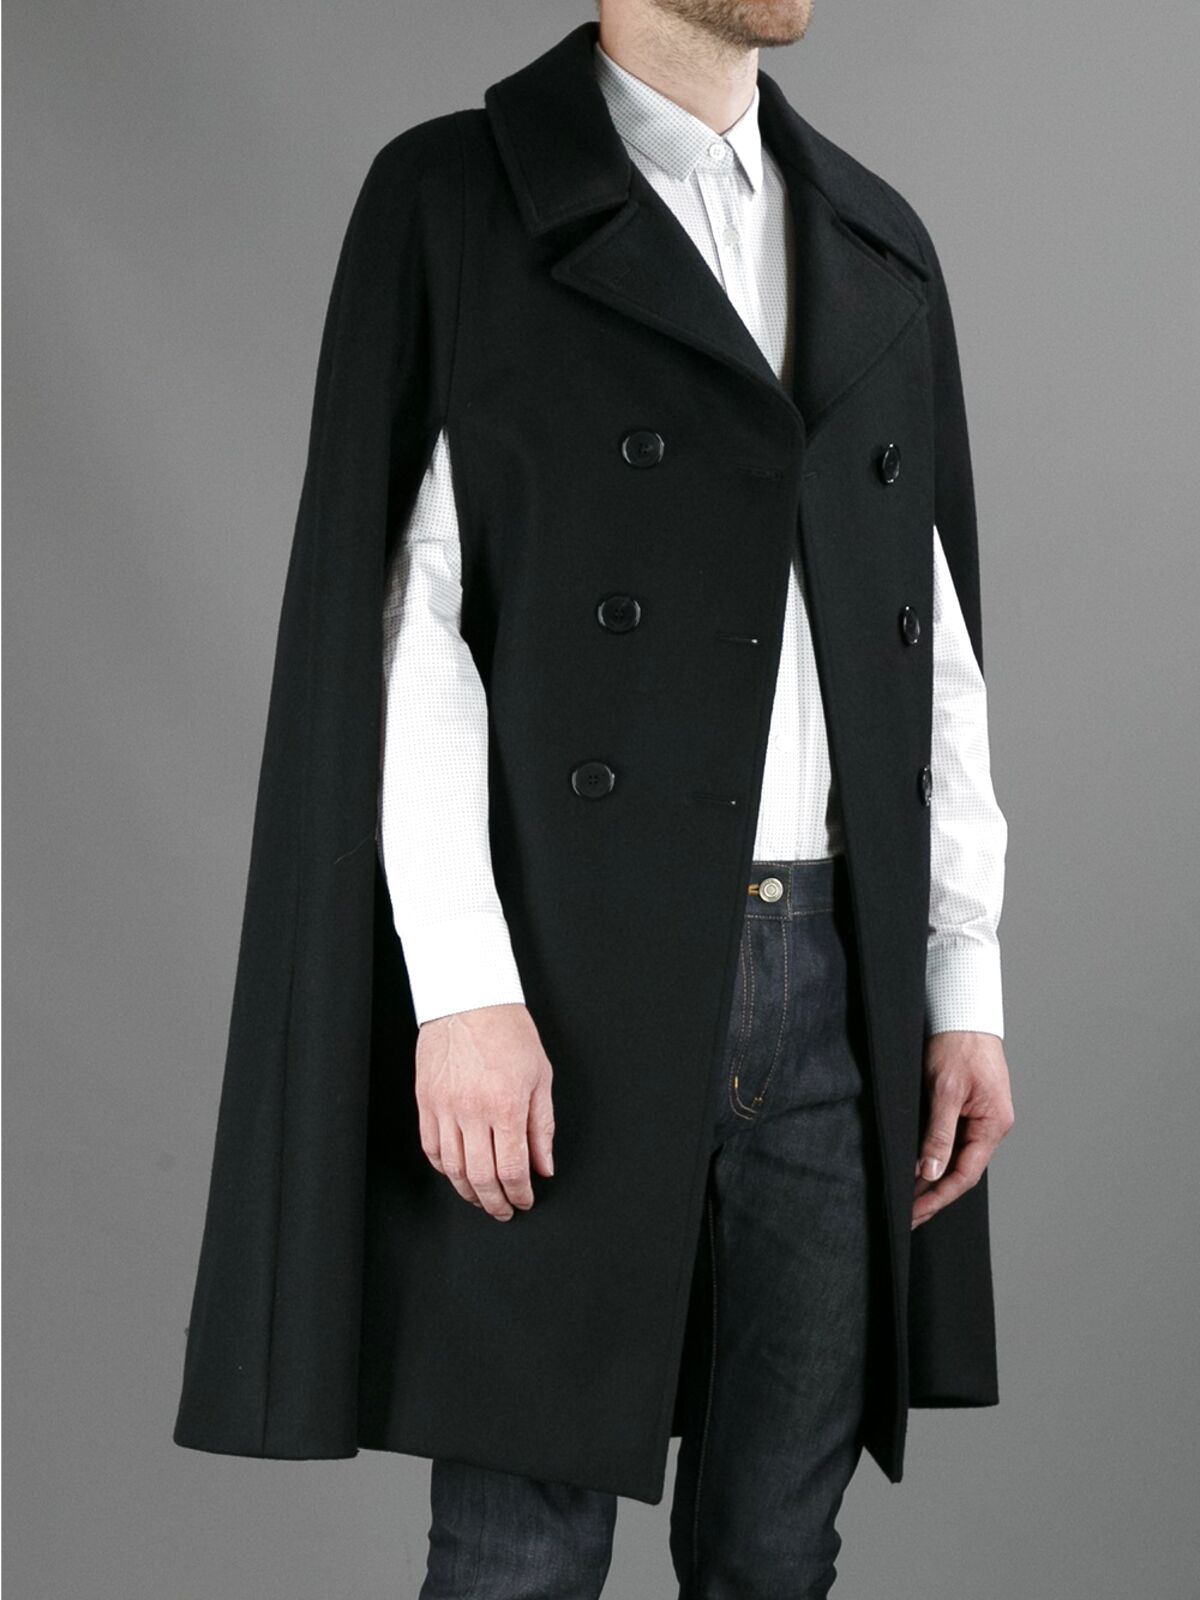 Mens Black Cape Coat for sale in UK | 62 used Mens Black Cape Coats